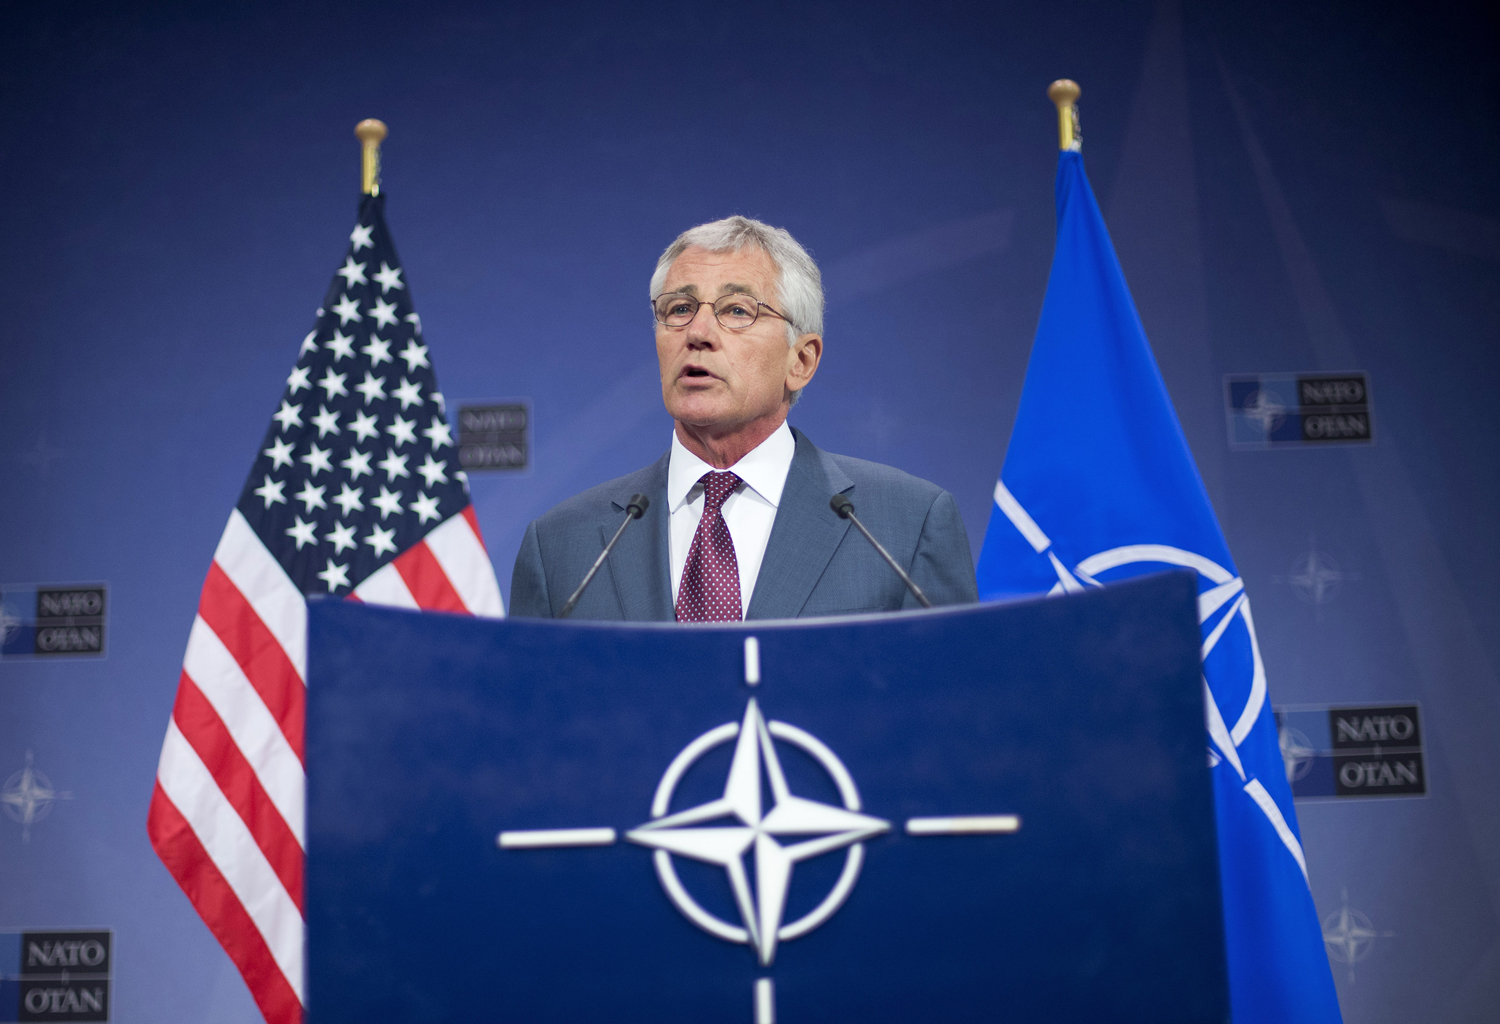 U.S. Defense Secretary Chuck Hagel speaks during a news conference in Brussels on June 4, 2014. (Reuters)